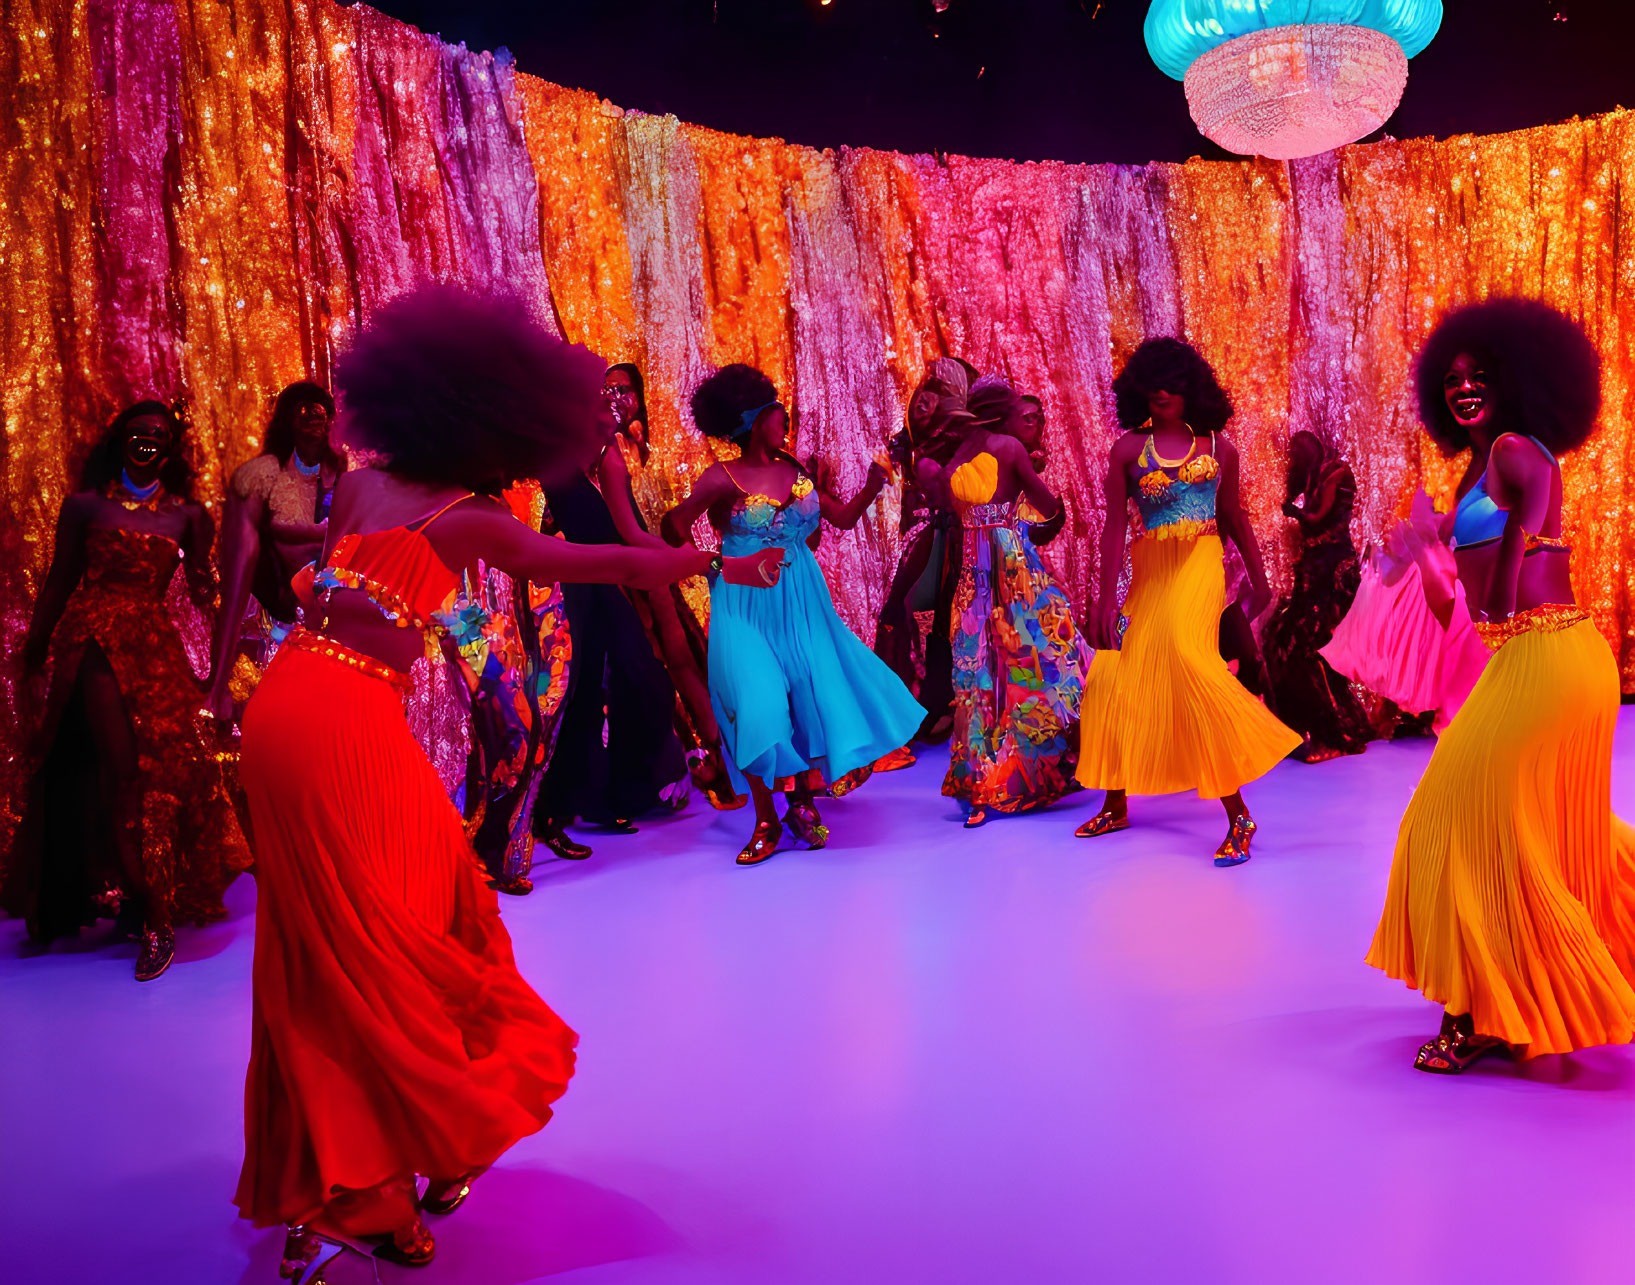 Colorful individuals dancing joyfully in vibrant setting